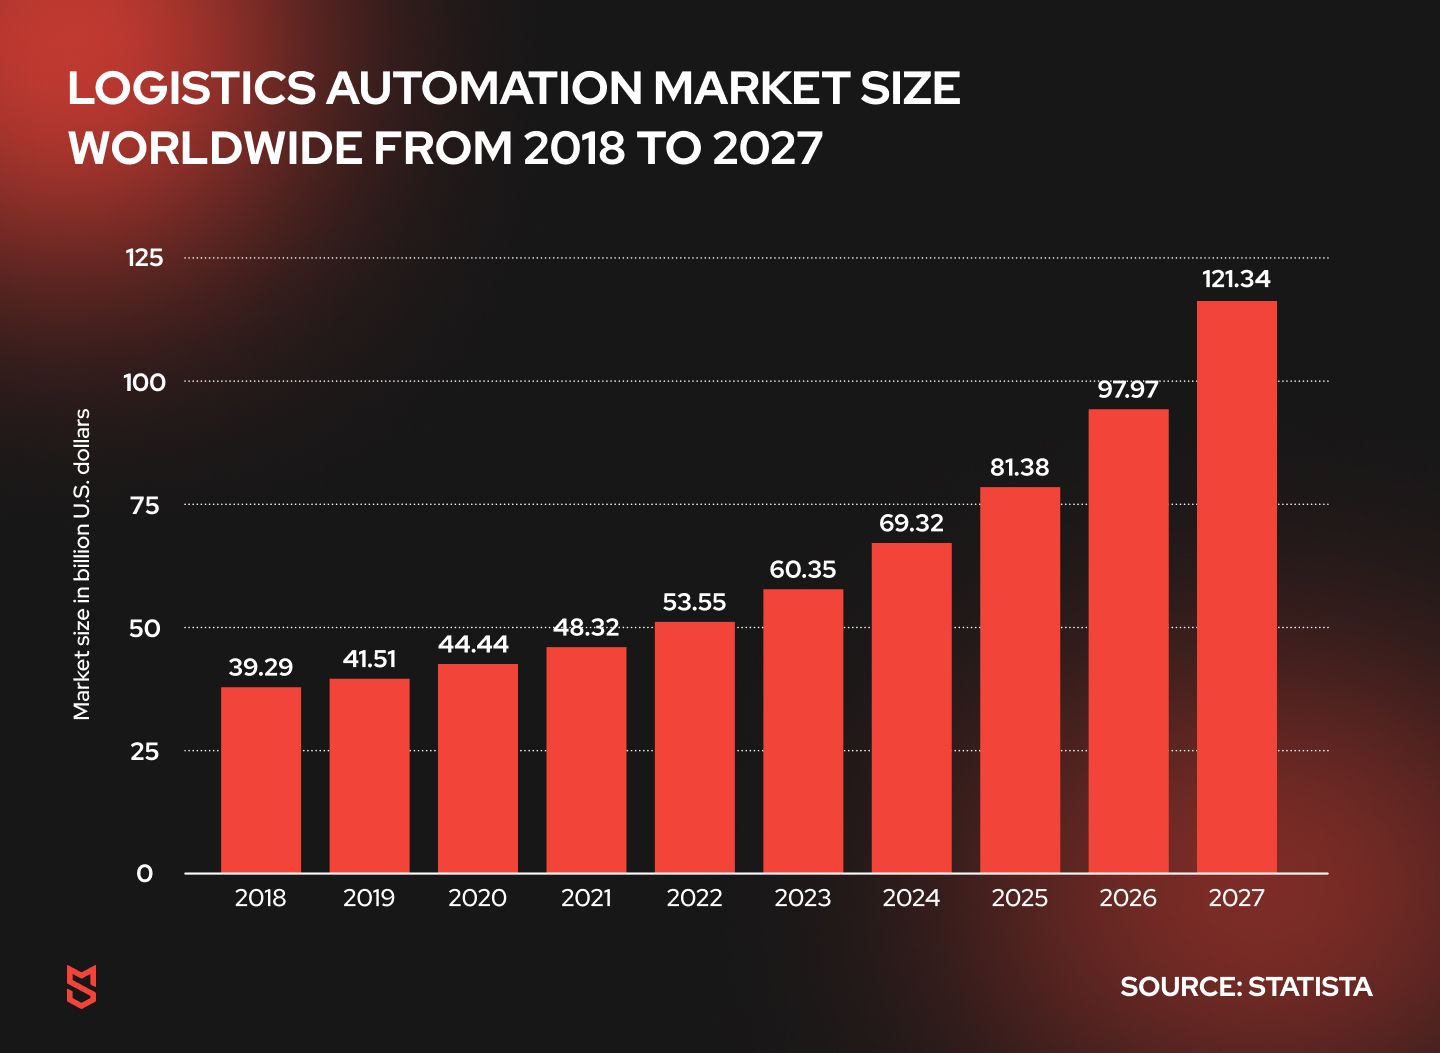 The global logistics automation market size